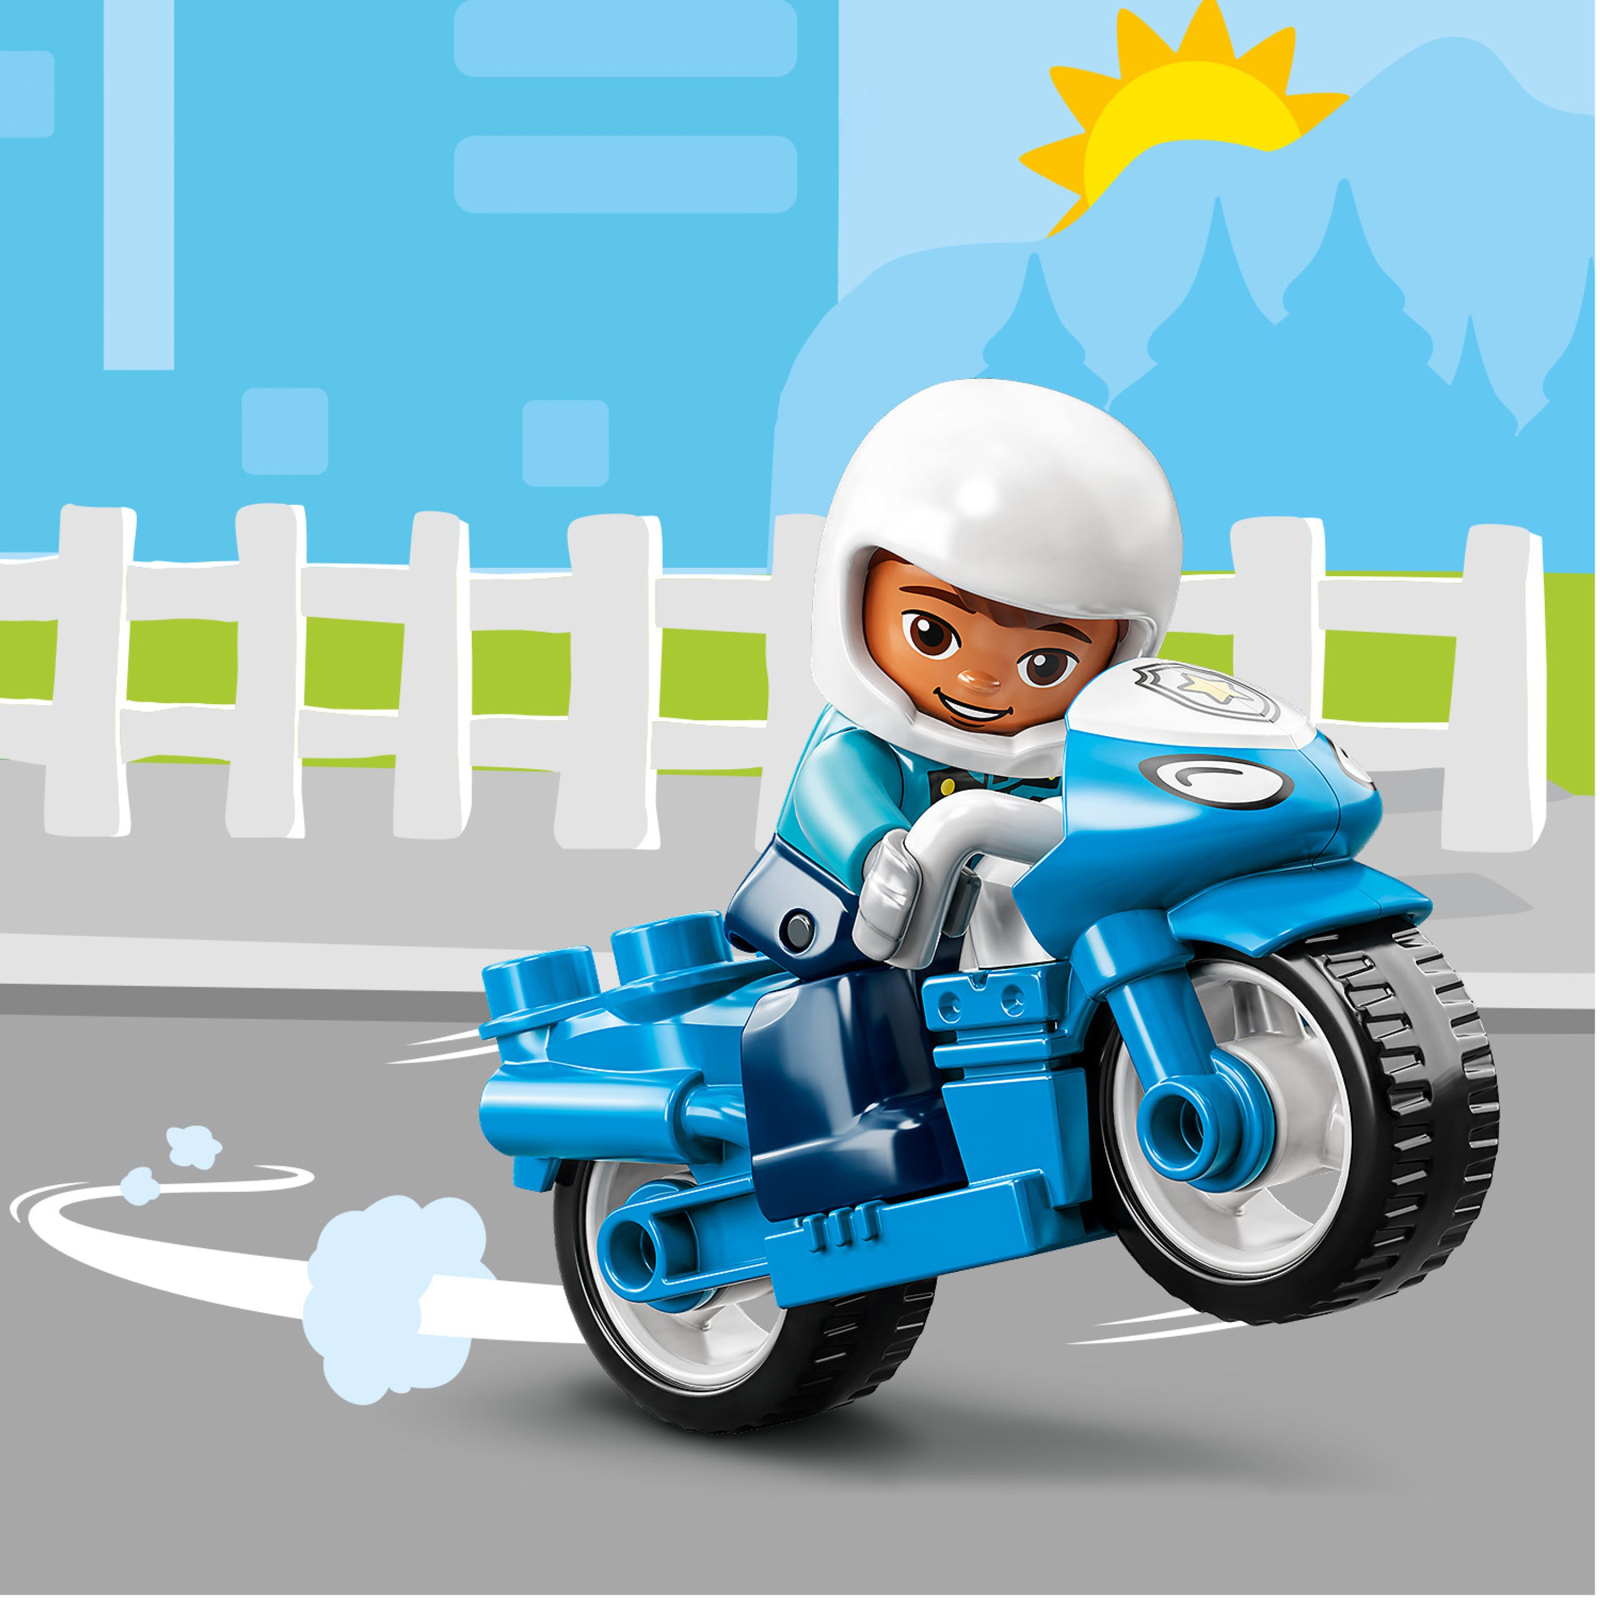 Конструктор LEGO DUPLO Town Поліцейський мотоцикл 5 деталей (10967) зображення 6